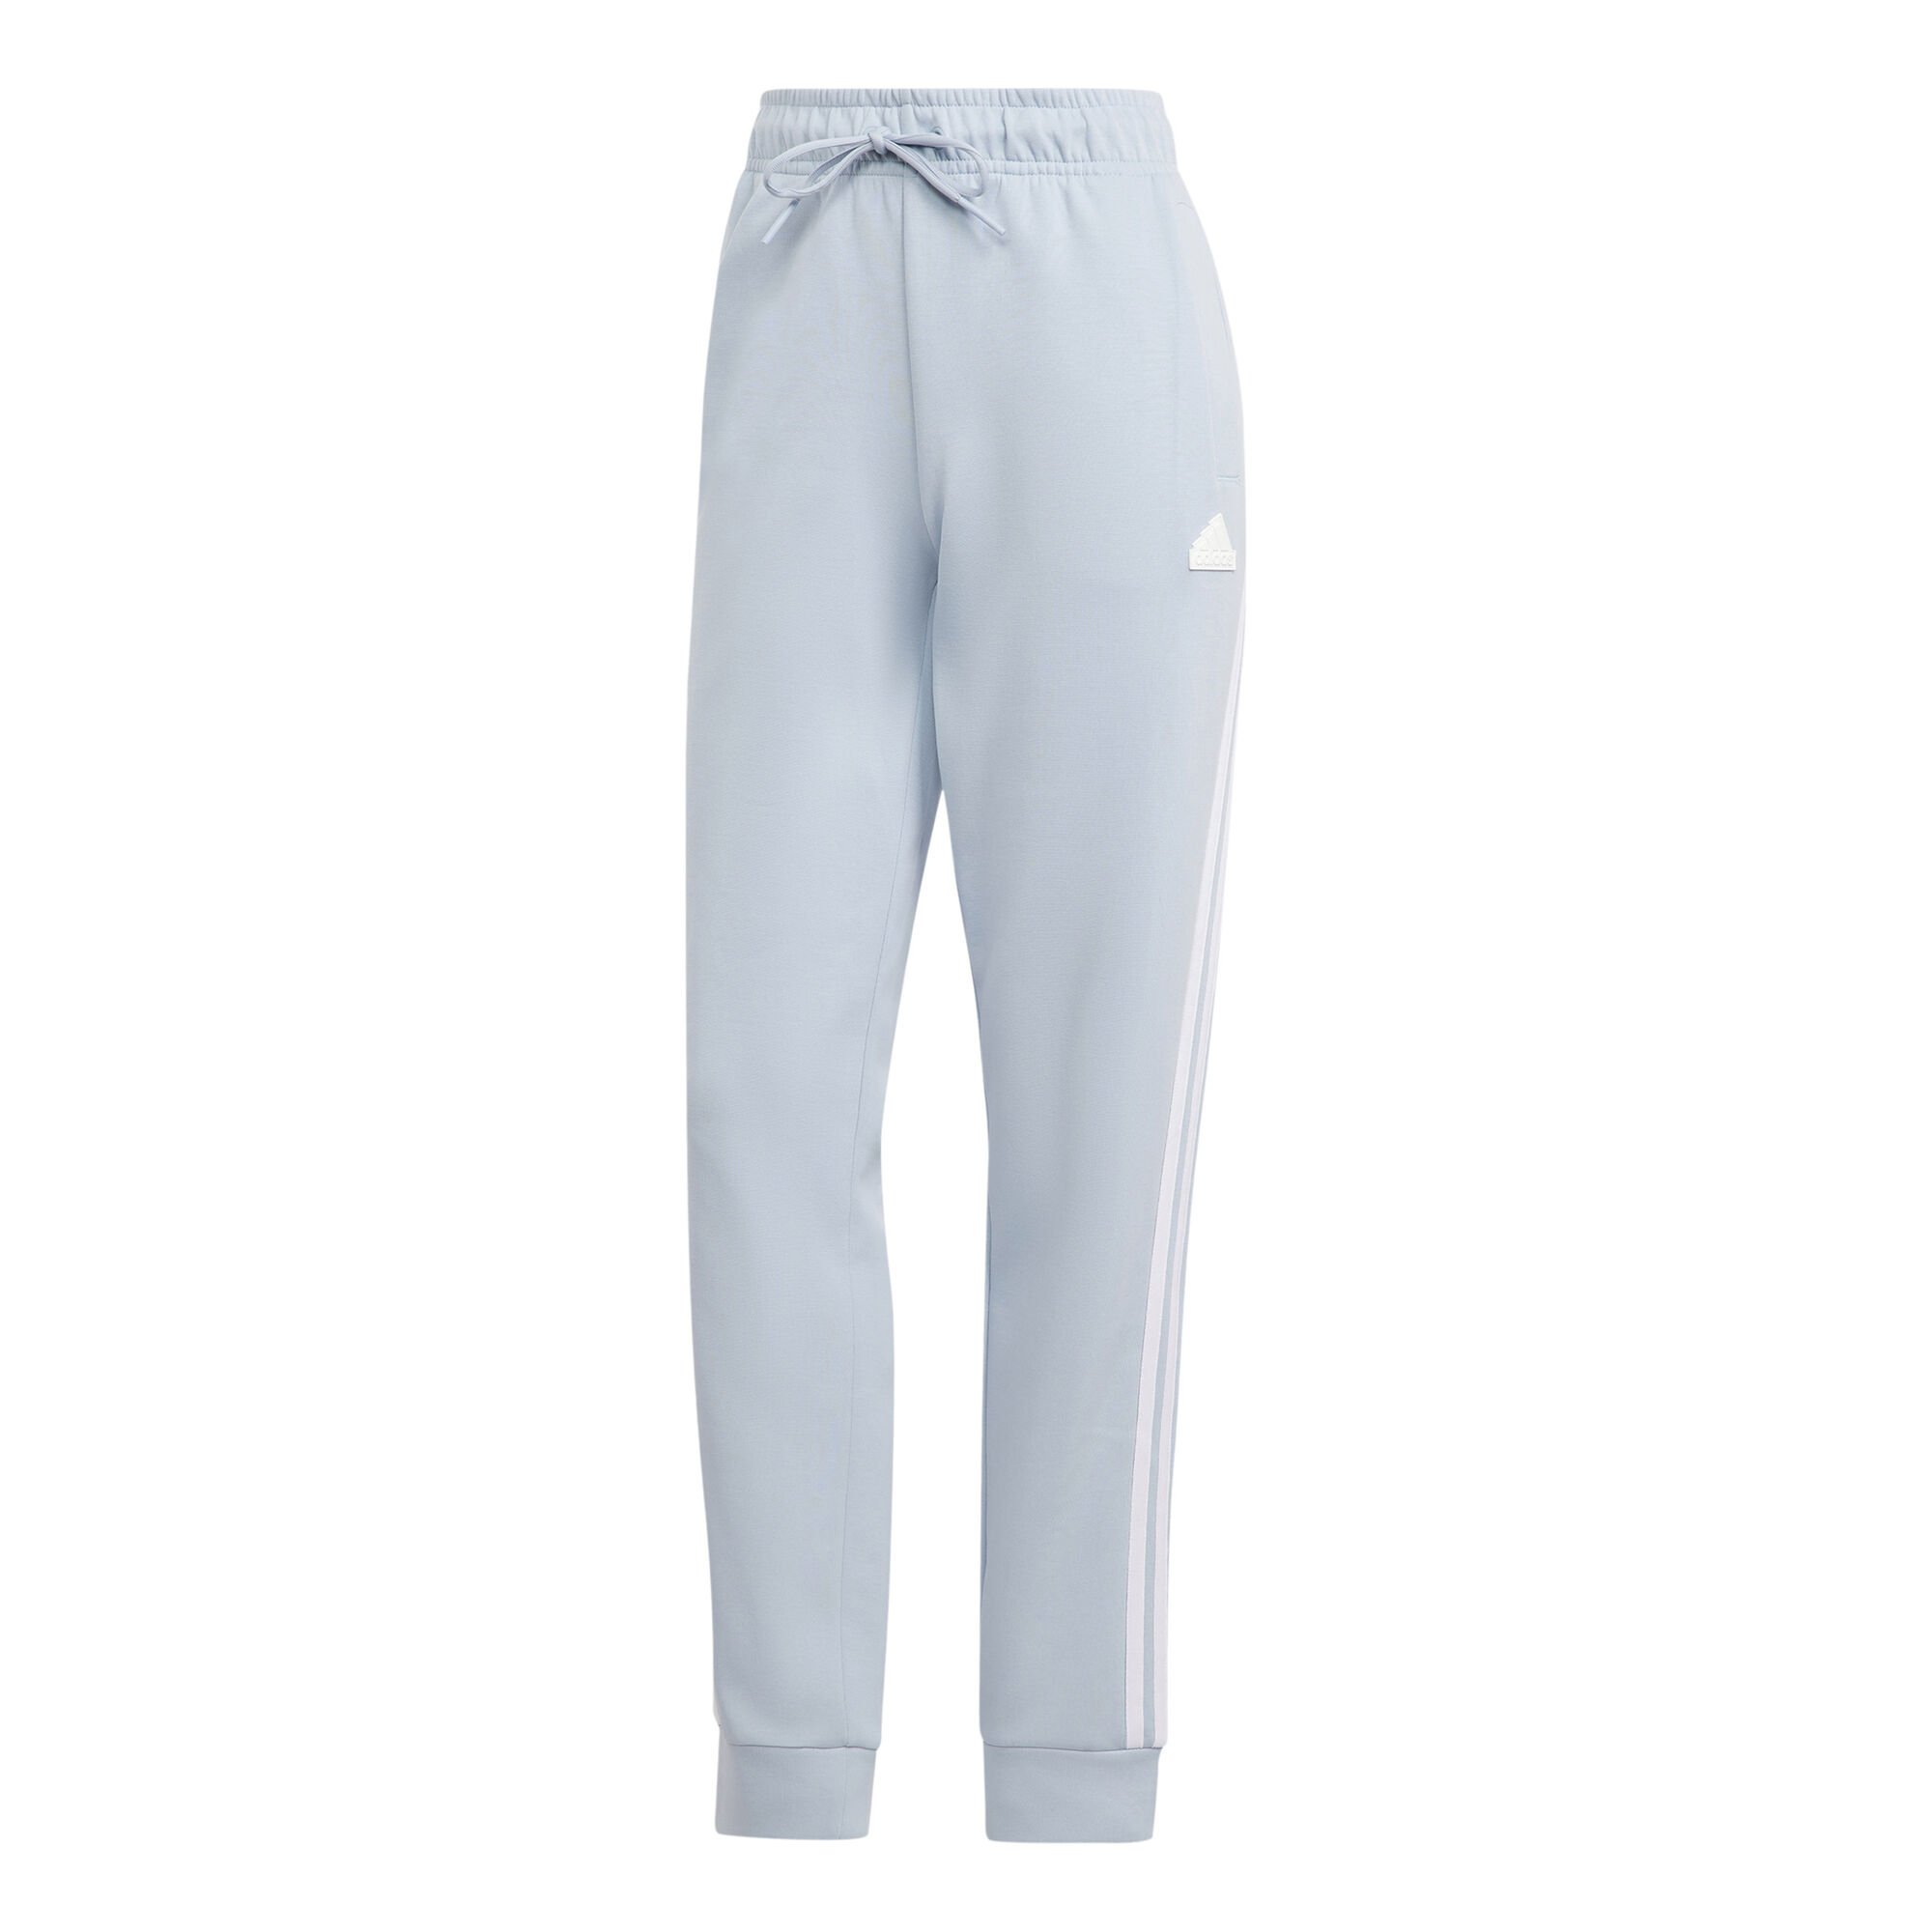 Buy adidas Linear Training Pants Women Blue Grey, White online